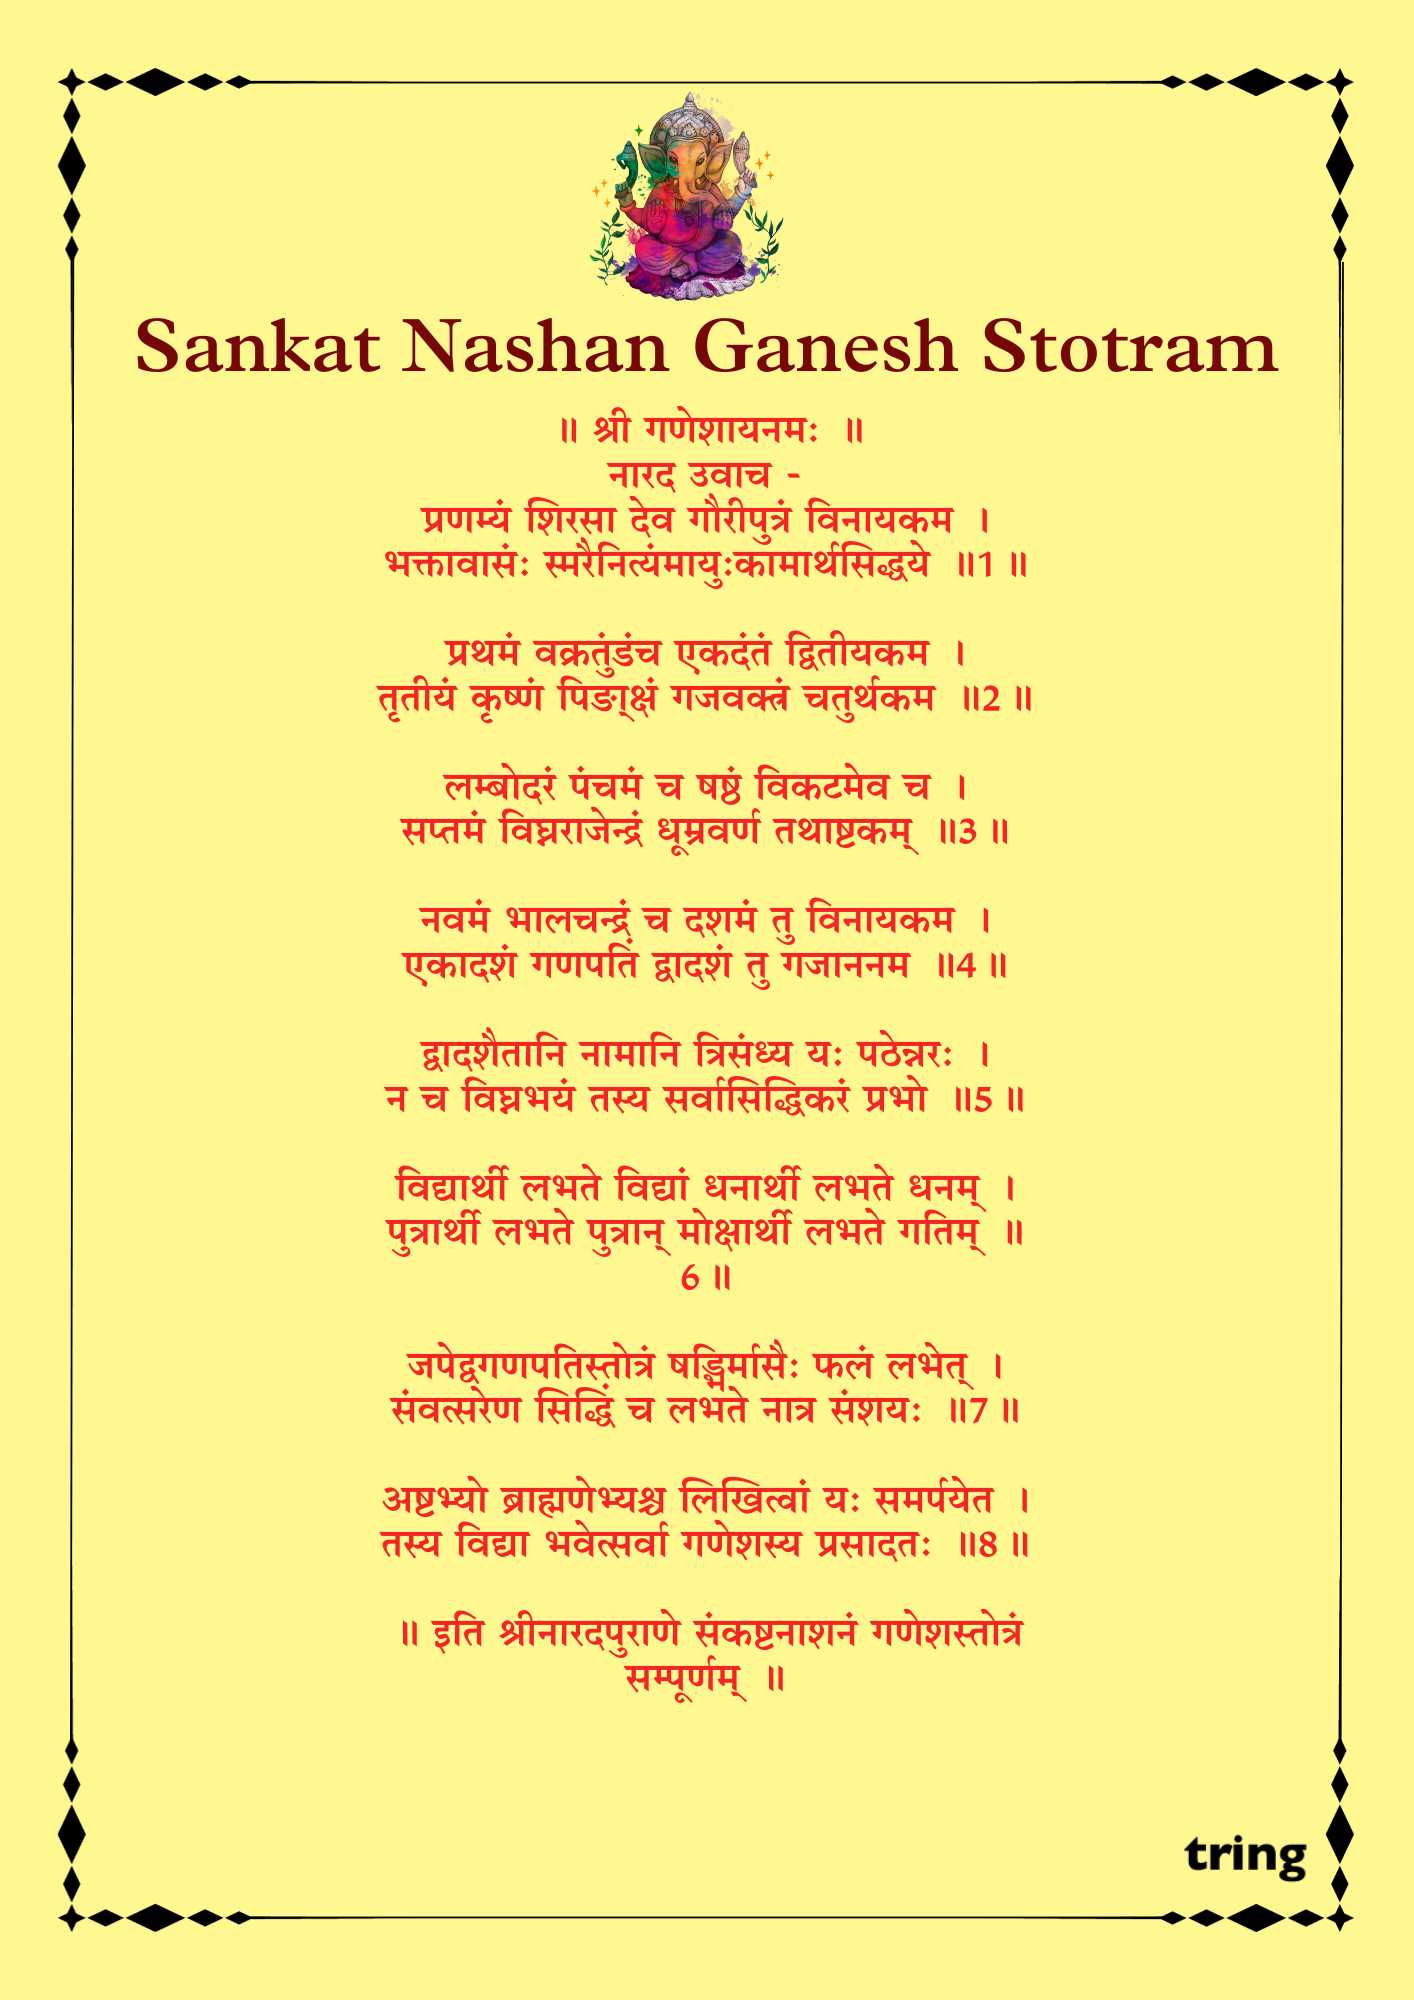 Sankat Nashan Ganesh Stotram Images